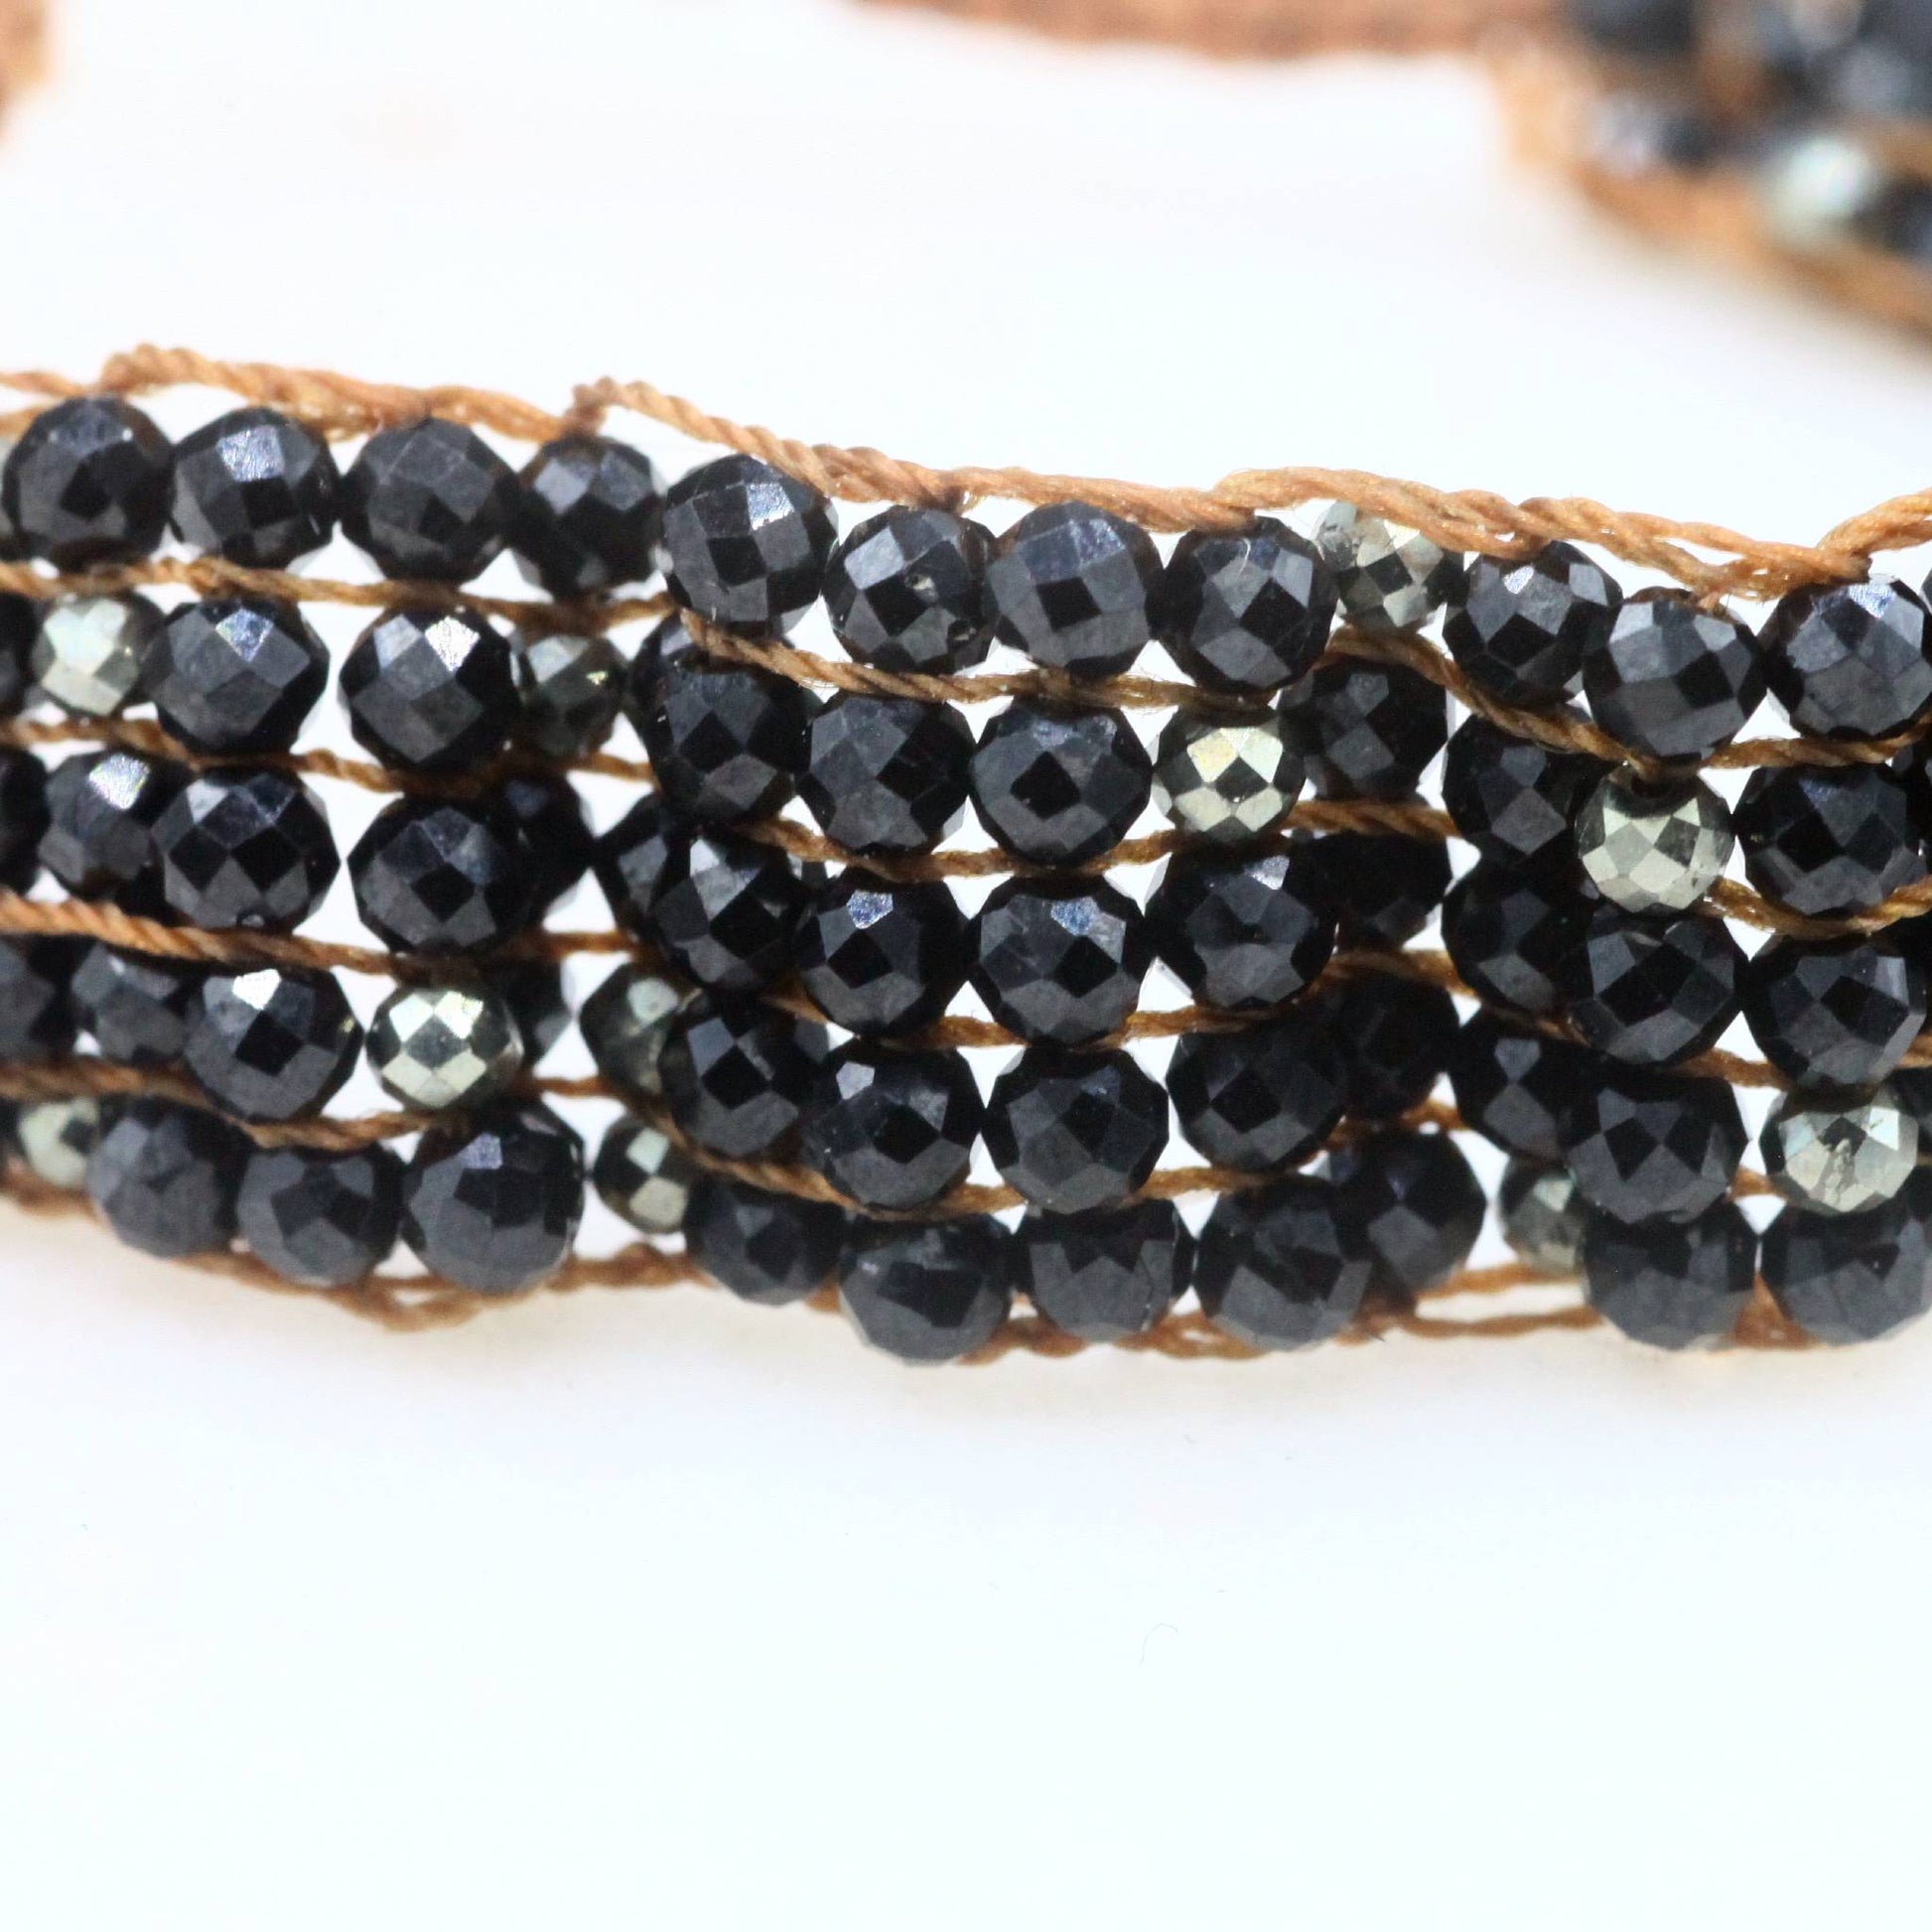 Lena Skadegard Jewelry | Black Spinel + Pyrite Gemstone Tassel Bracelet | Firecracker